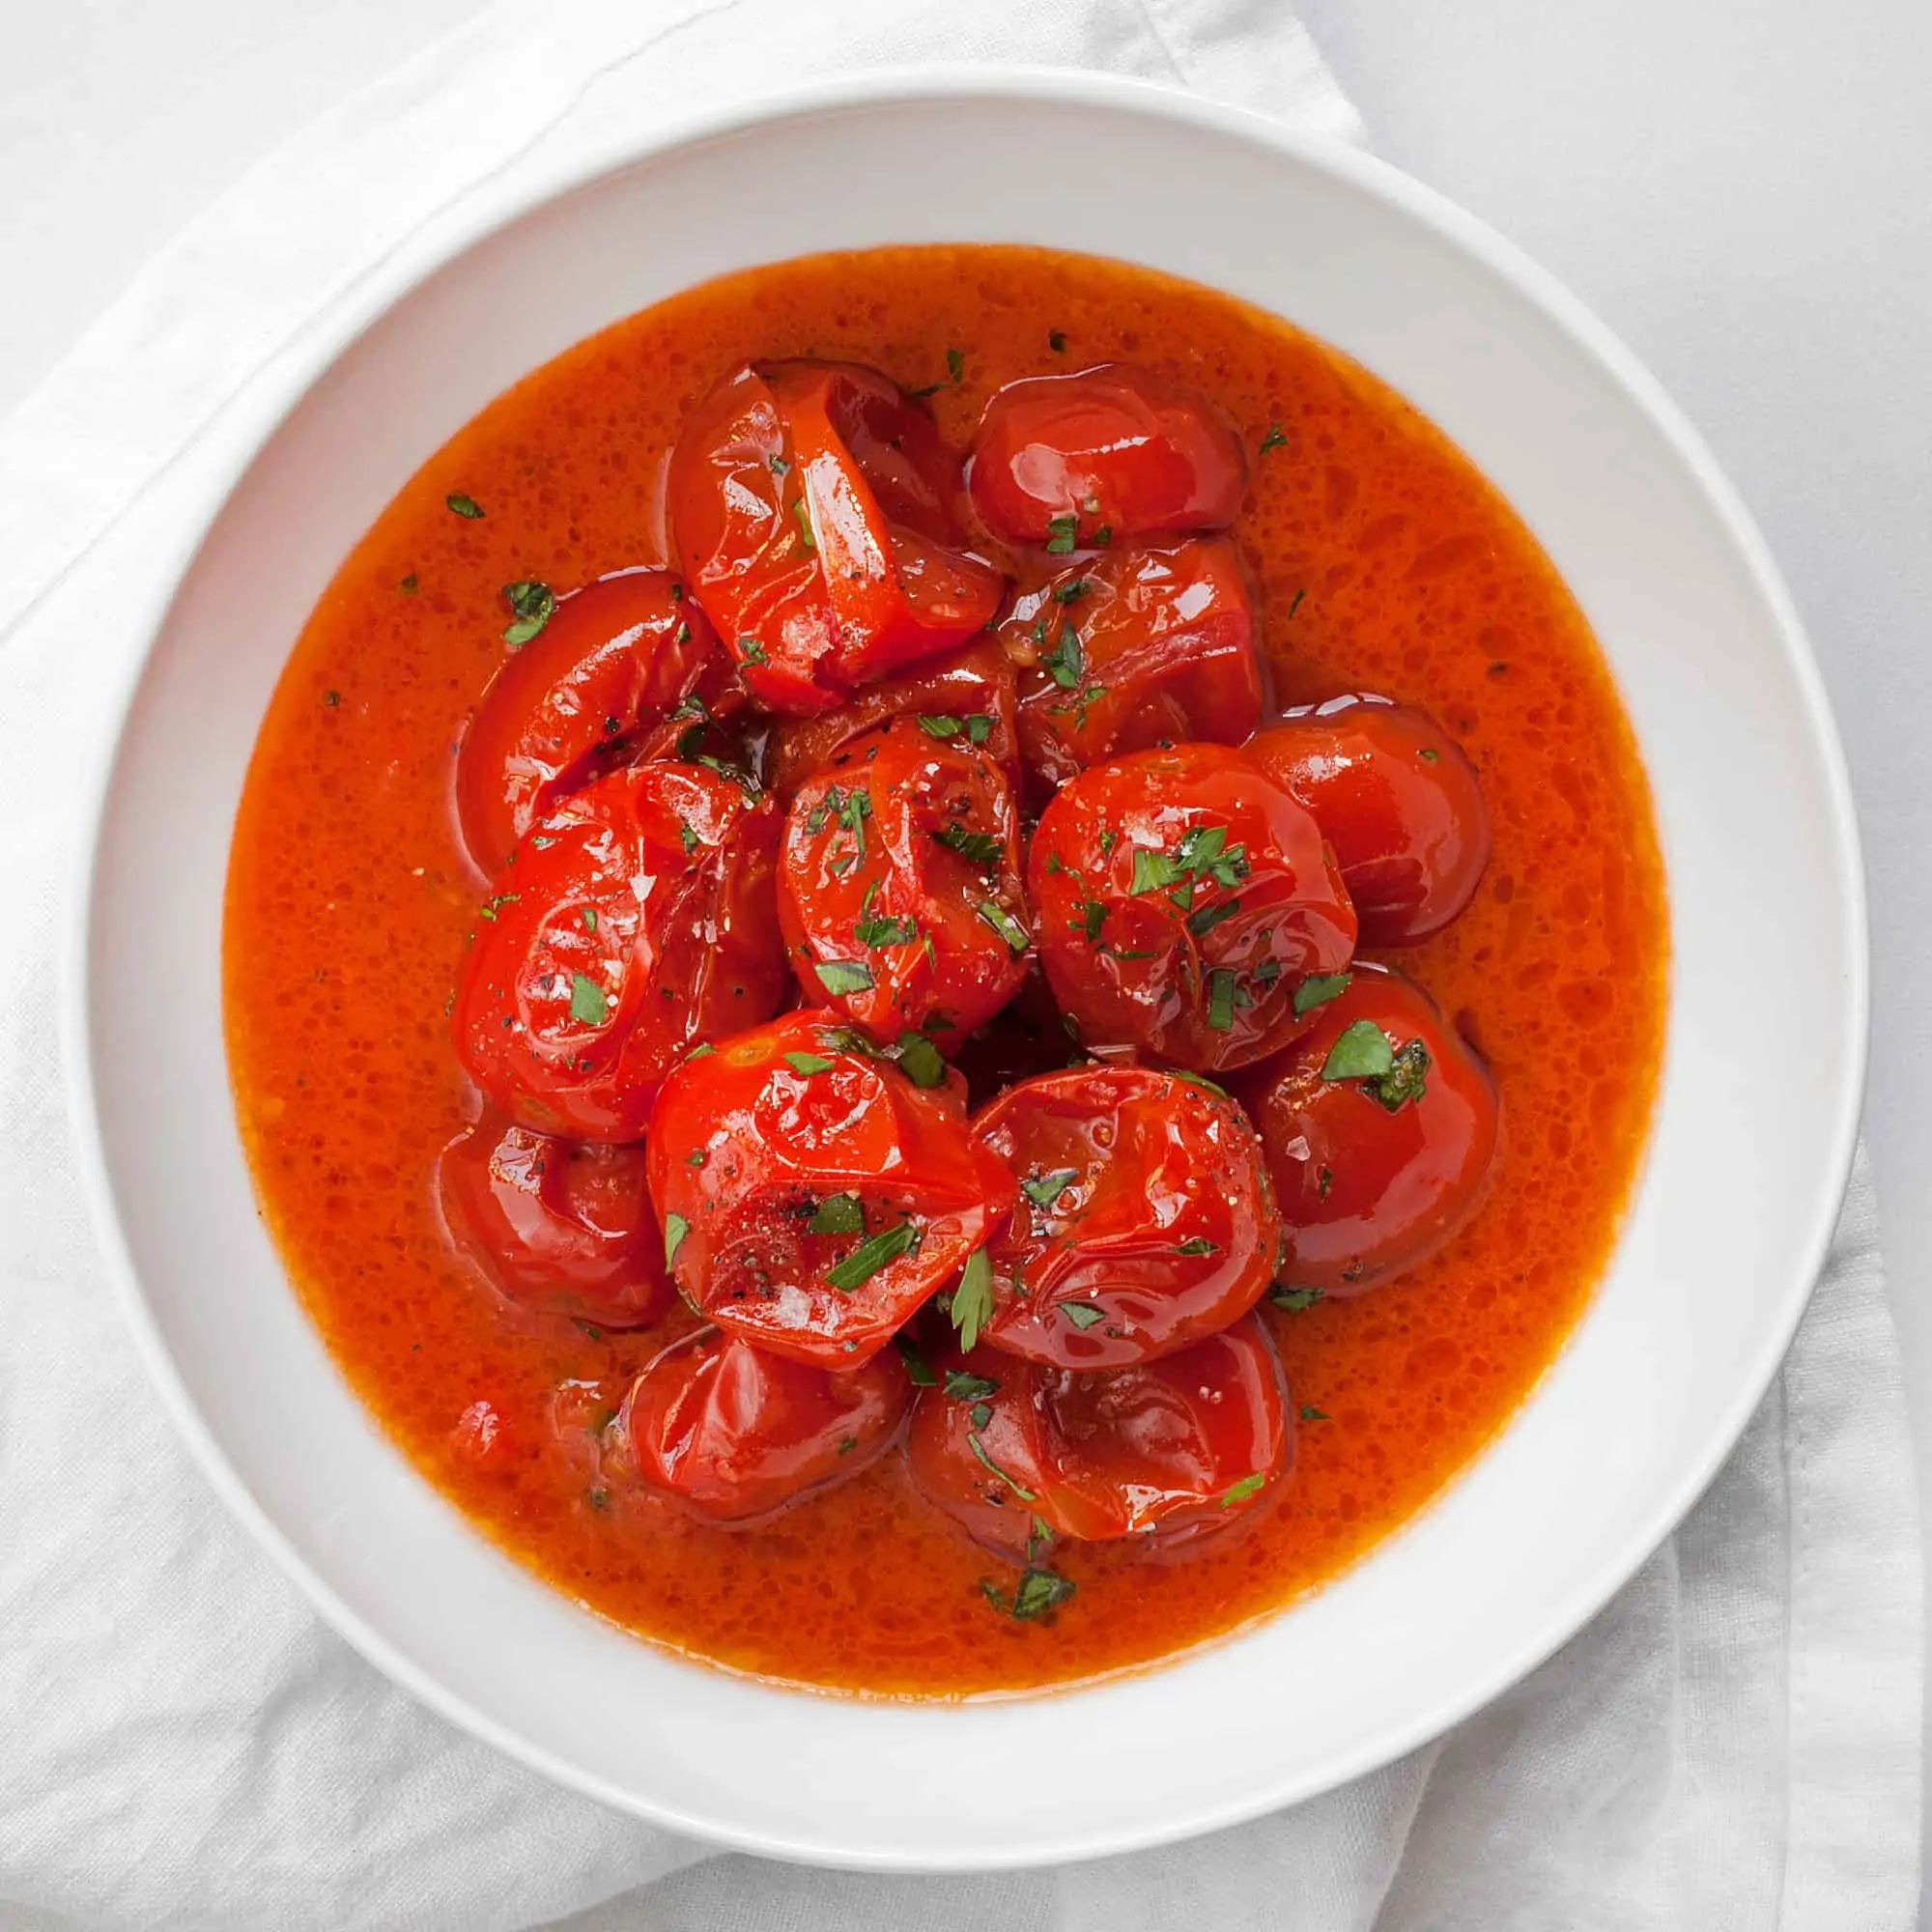 Roasted tomato vinaigrette in a bowl